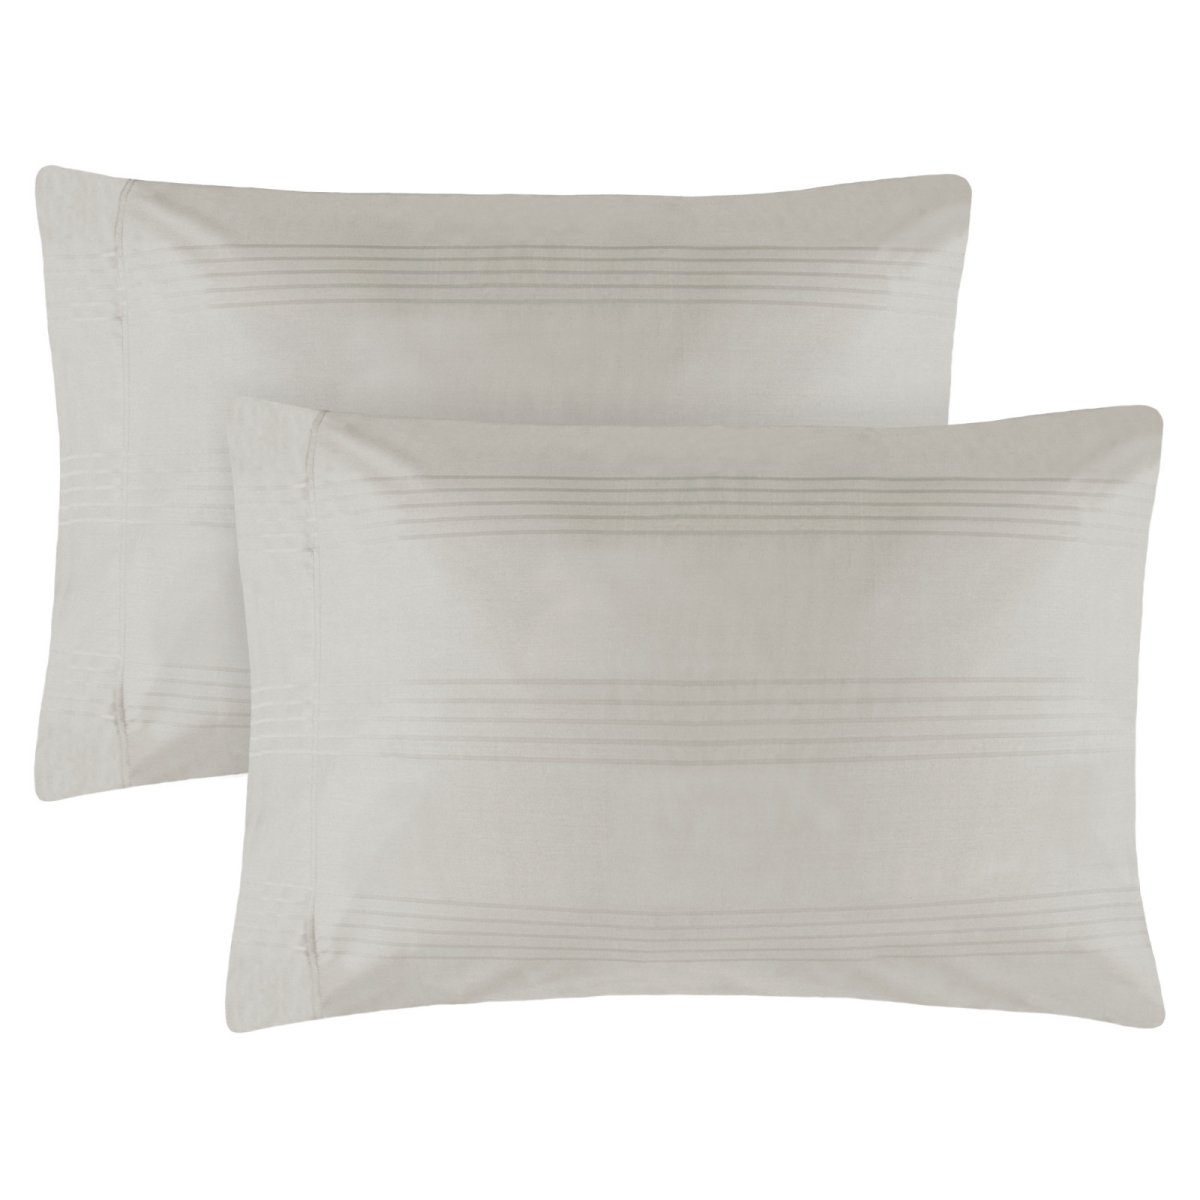 Yms008234 Premium 420 Thread Count 100 Percent Cotton Pillowcase Set, Silver - King - 2 Piece